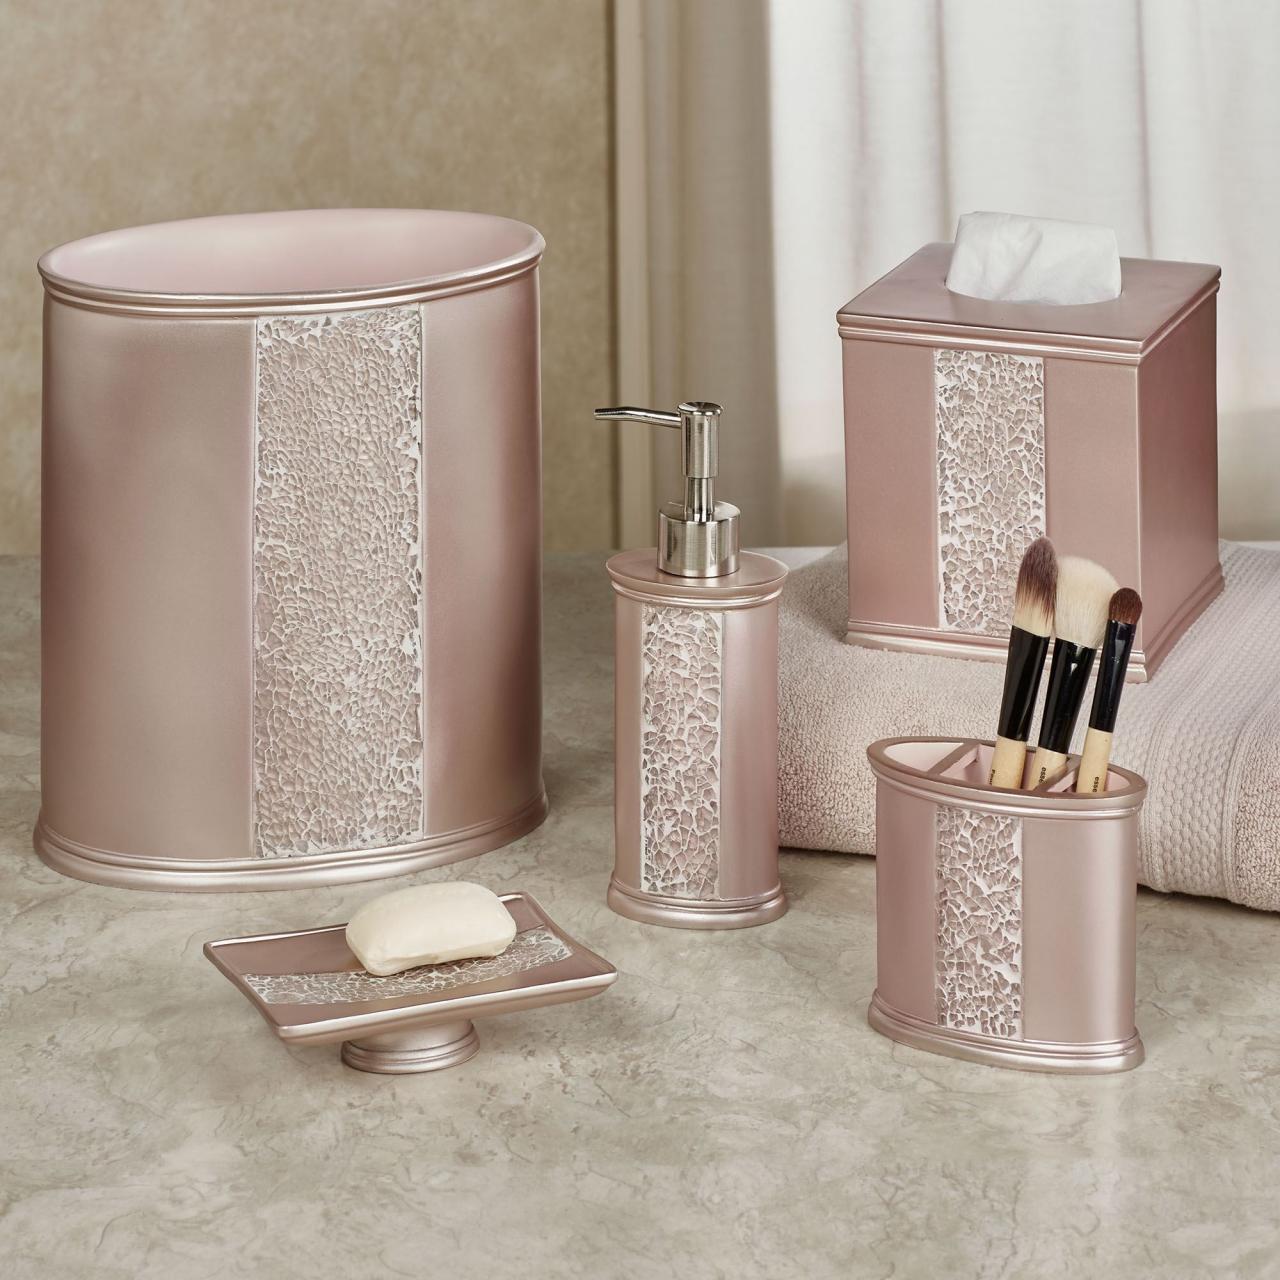 Sinatra Pale Blush Mosaic Bath Accessories in 2021 Pink bathroom